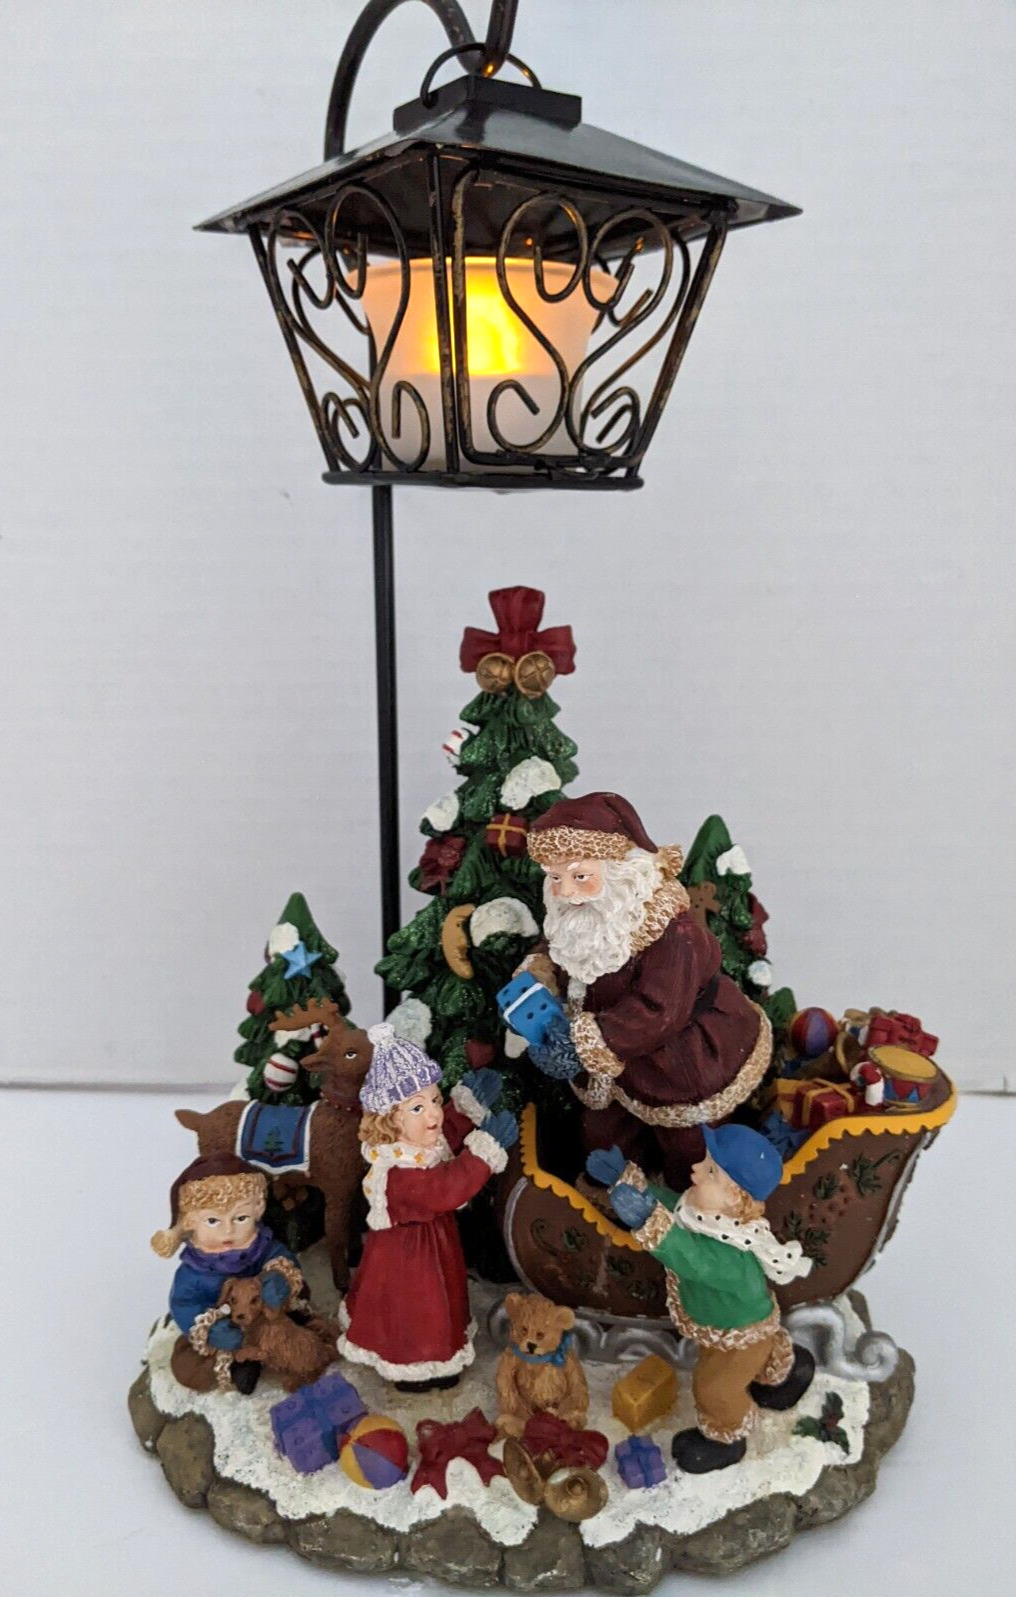 VTG Costco Christmas Candle Lamp Scene - Santa, Sleigh, Tree, Toys & Children